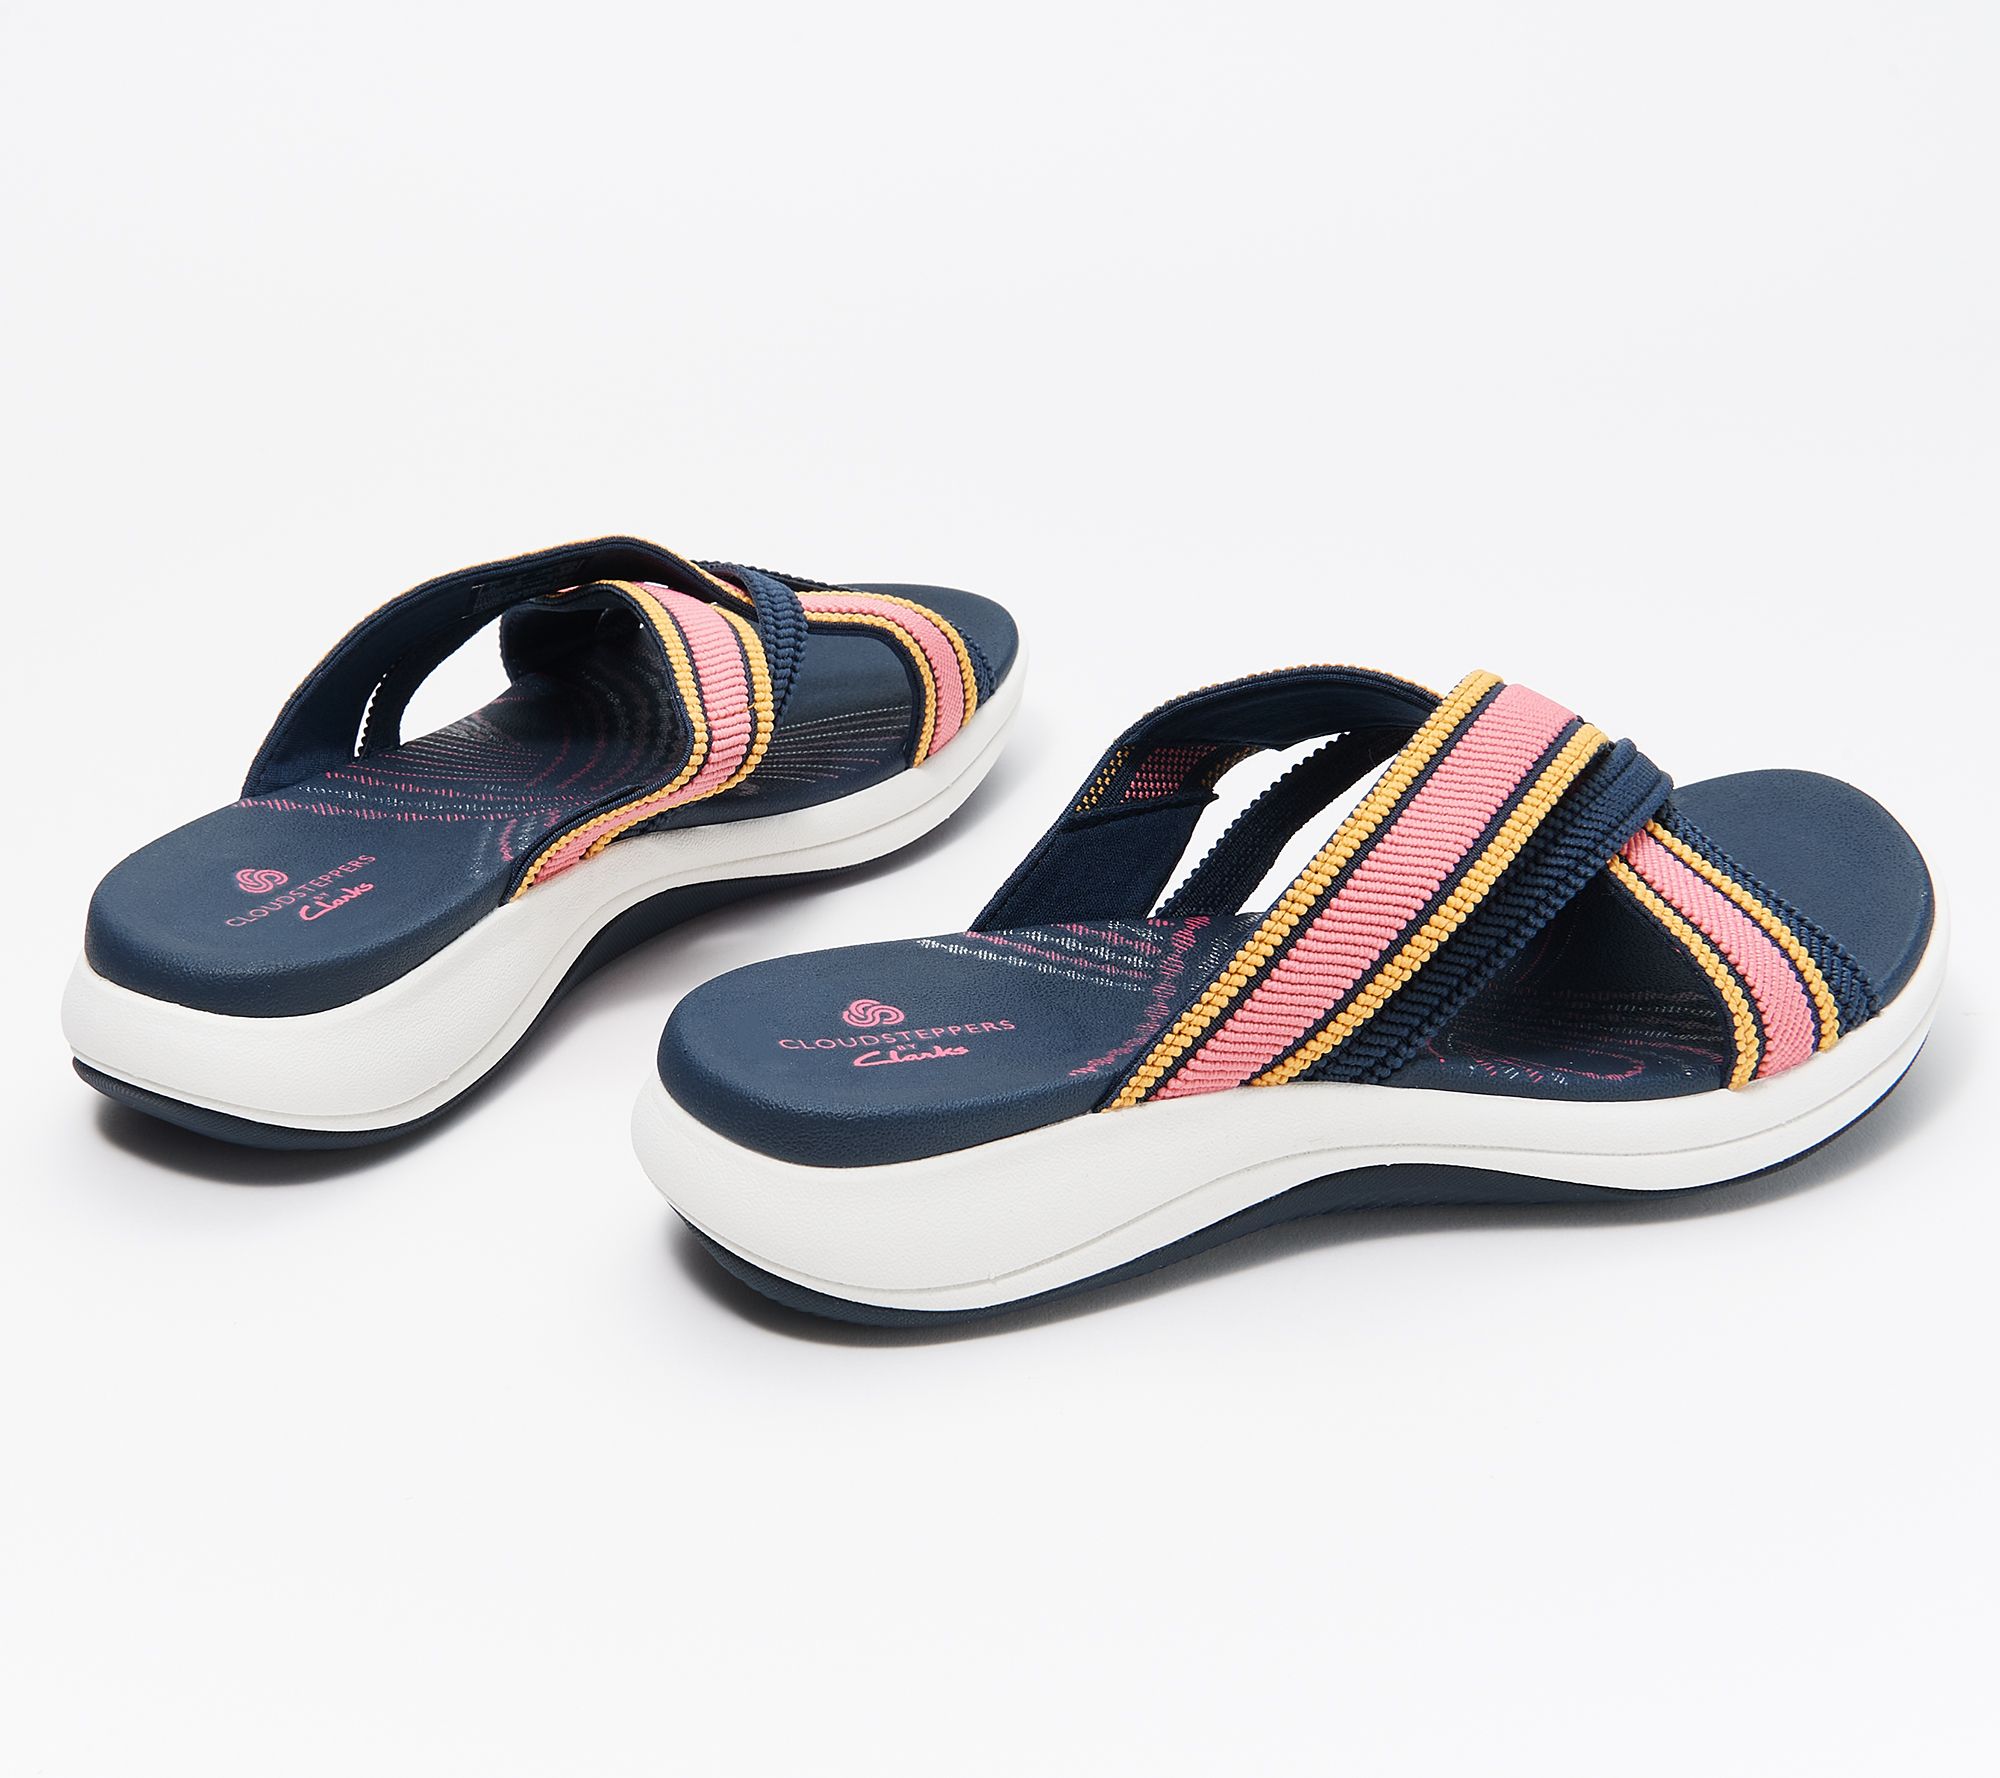 Clarks Sport Slide Sandals - Mira Isle - QVC.com